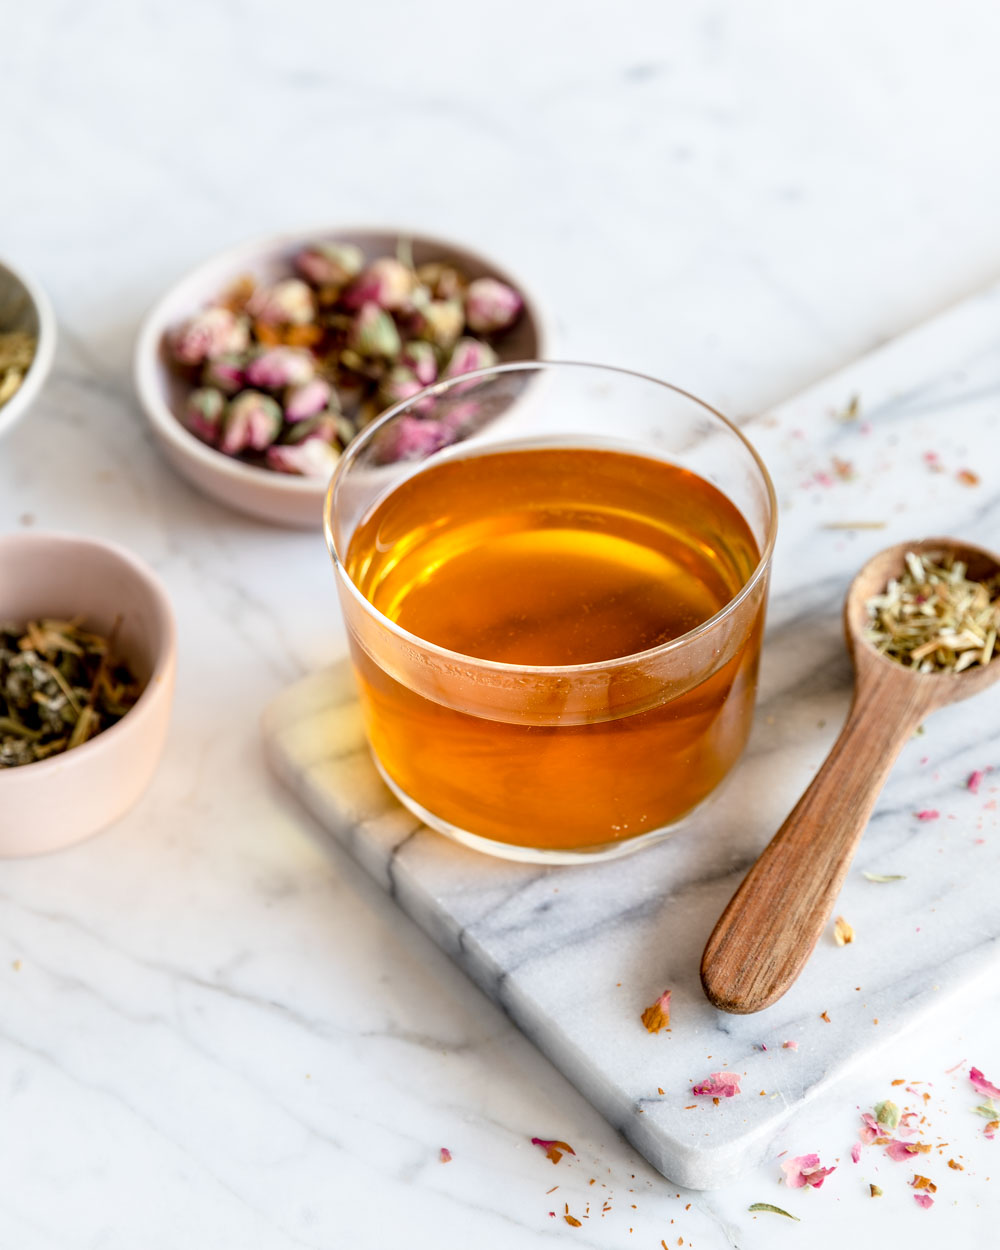 Best Favorite Herbal Tea Infusions HowTo Tea Benefits TheGreenCreator 14